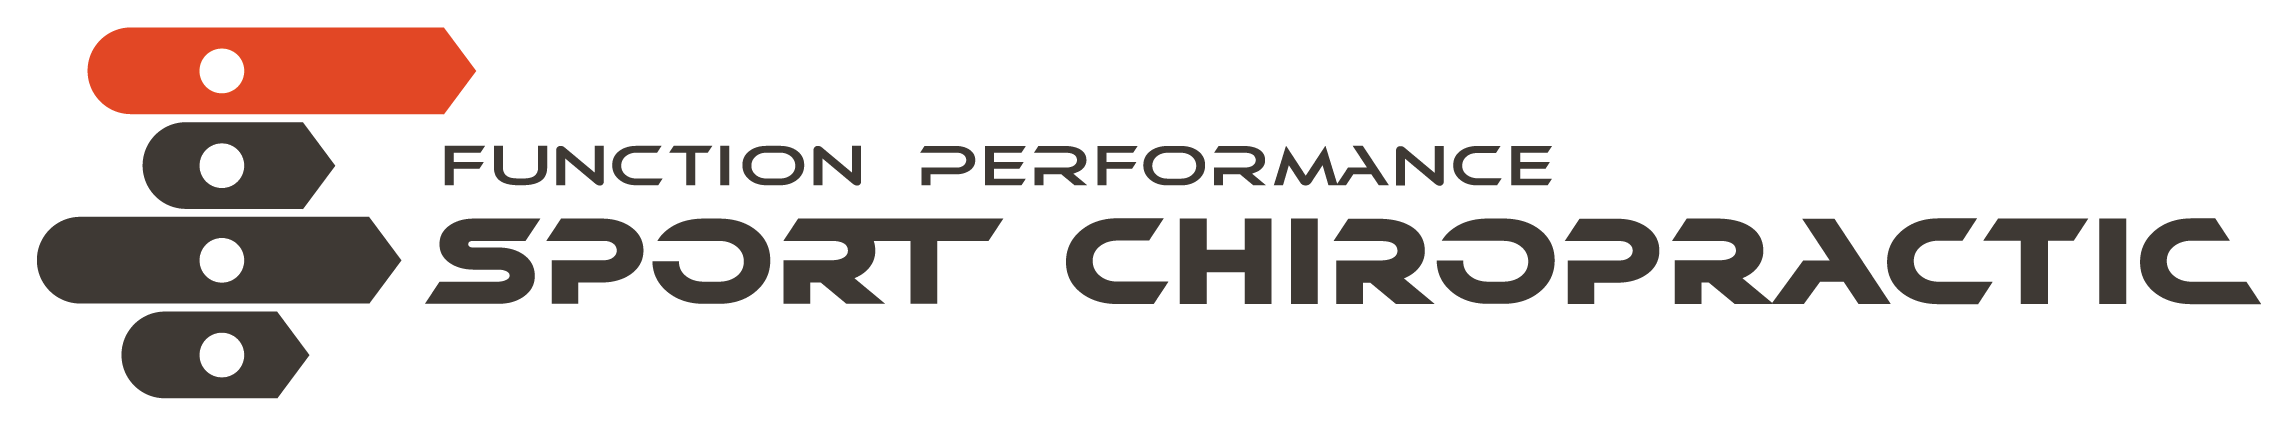 Function Performance Sport Chiropractic logo